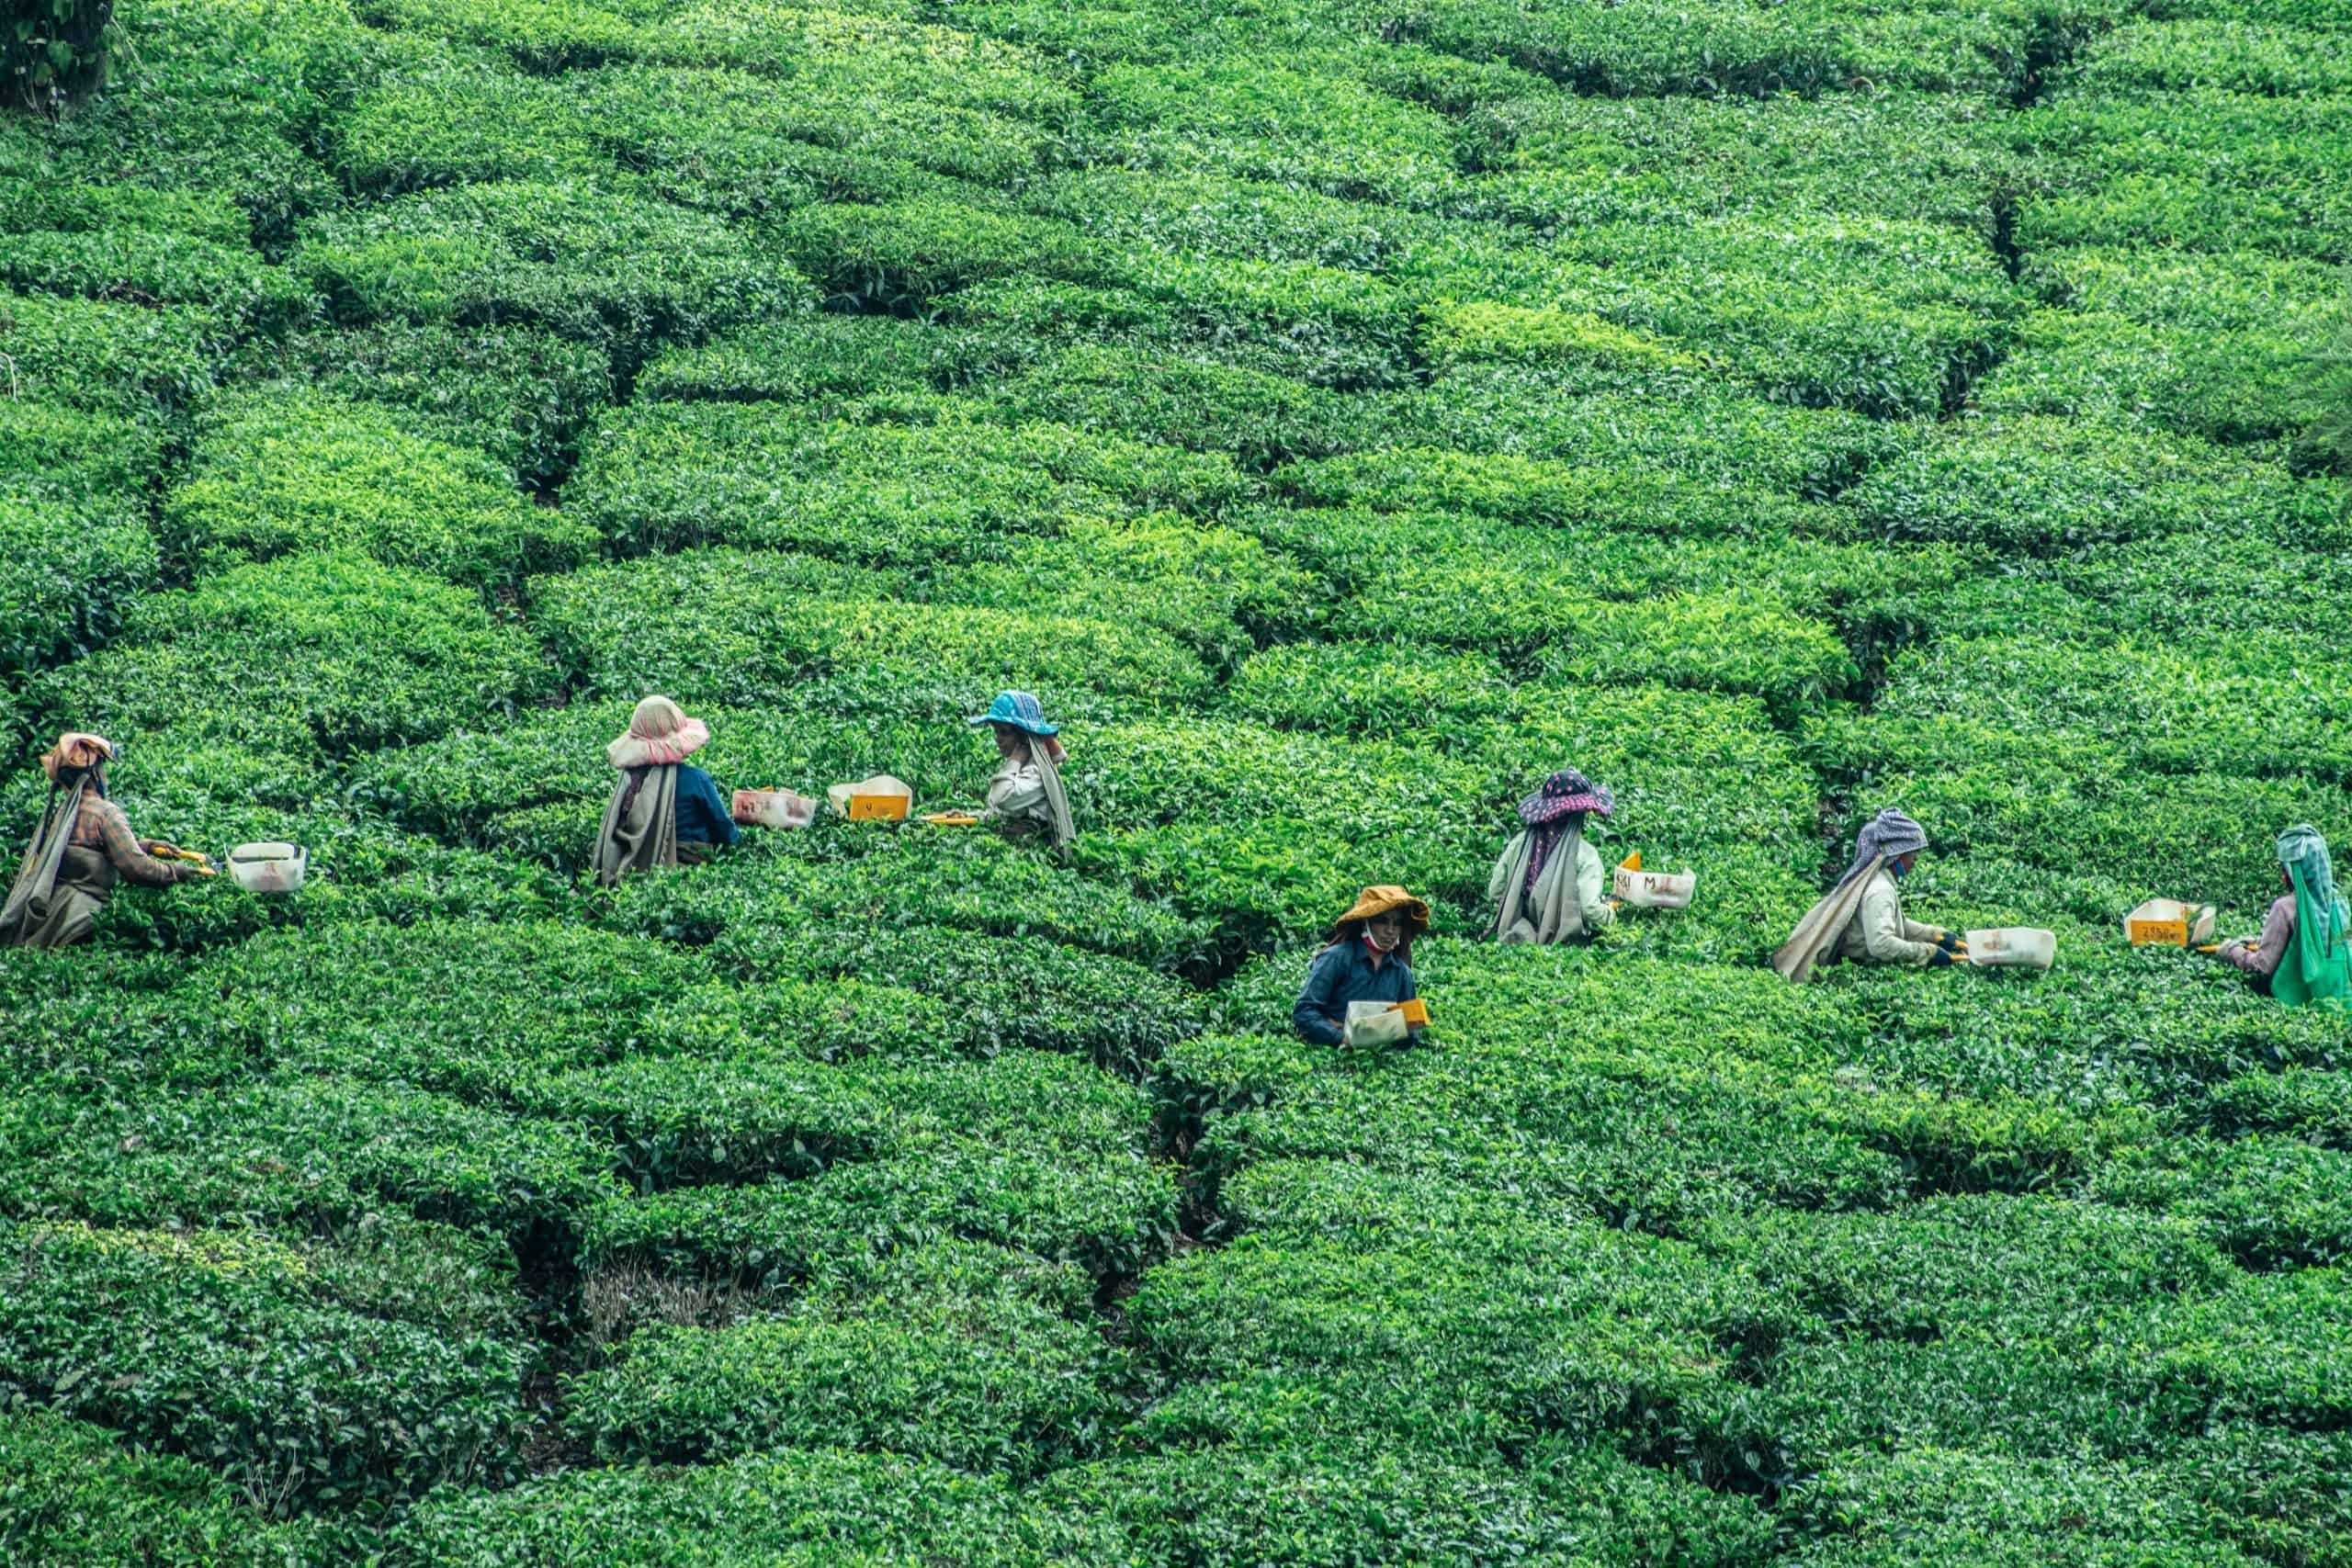 Farmers in a green field in India